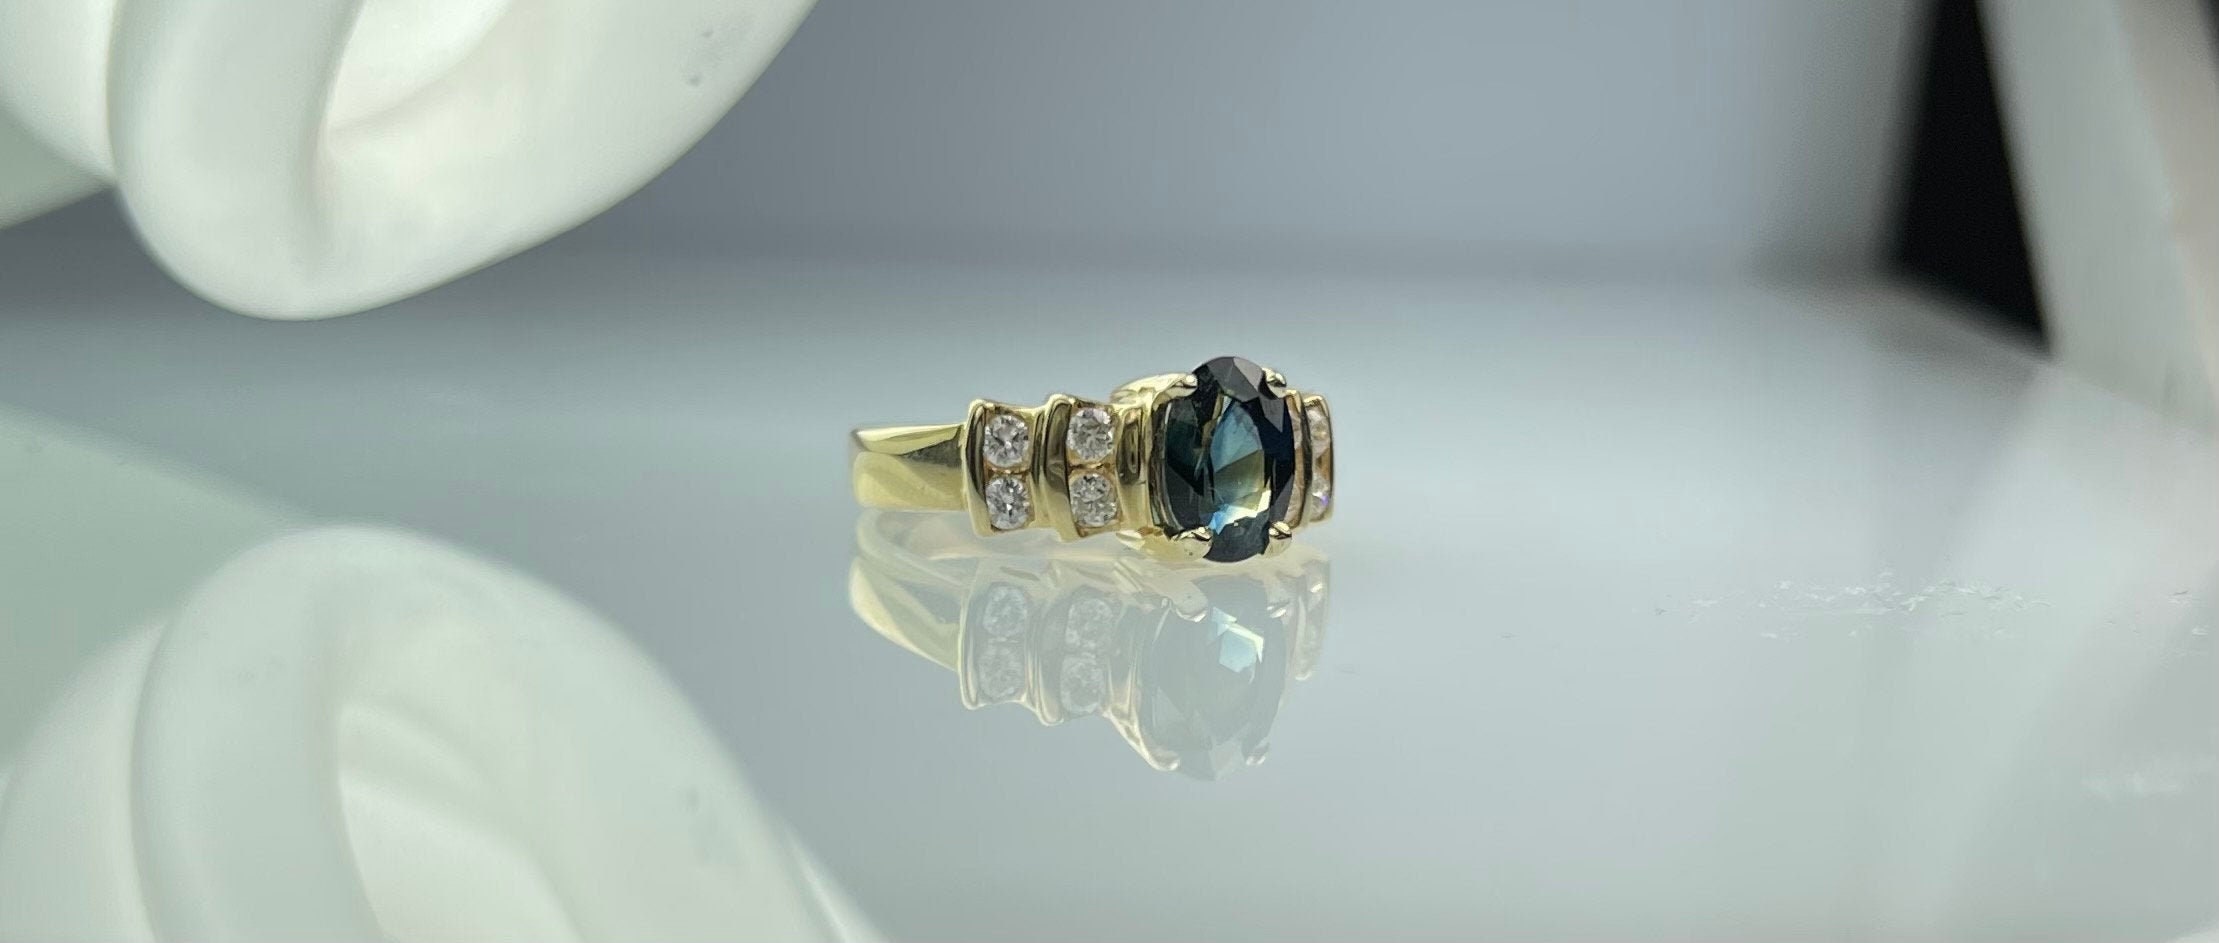 Oval Sapphire & Diamond ring - 14k yellow gold